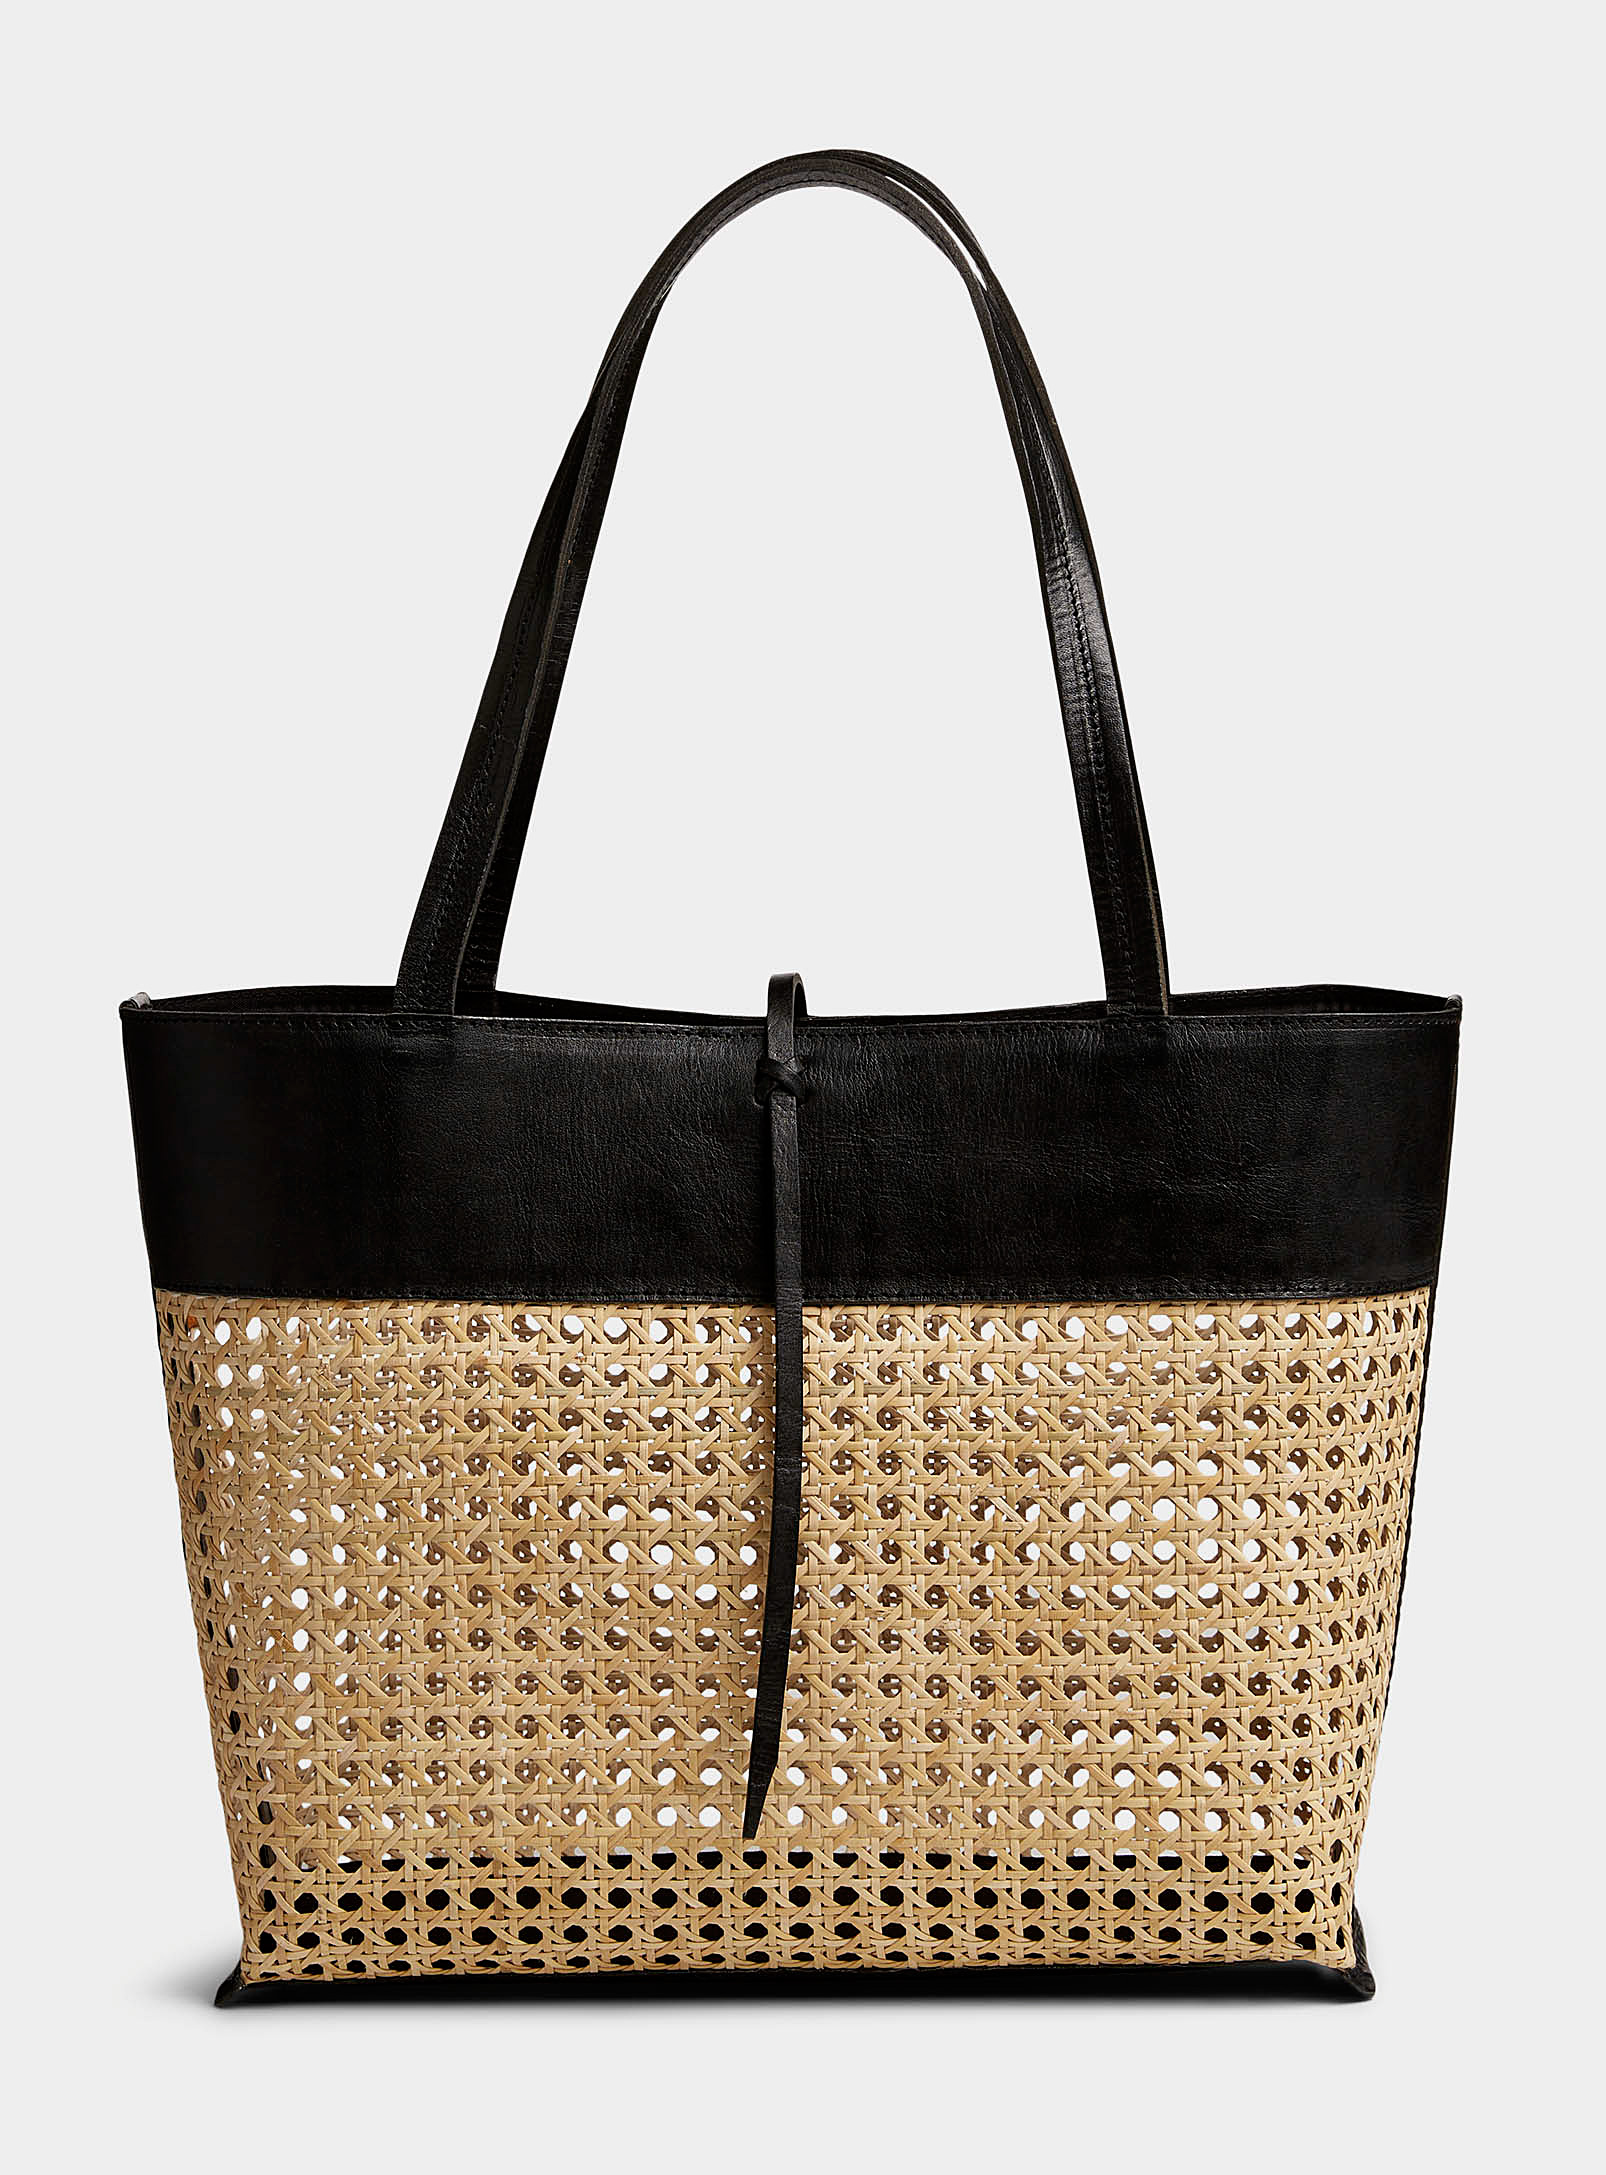 Simons - Women's Leather-trim cane Tote Bag